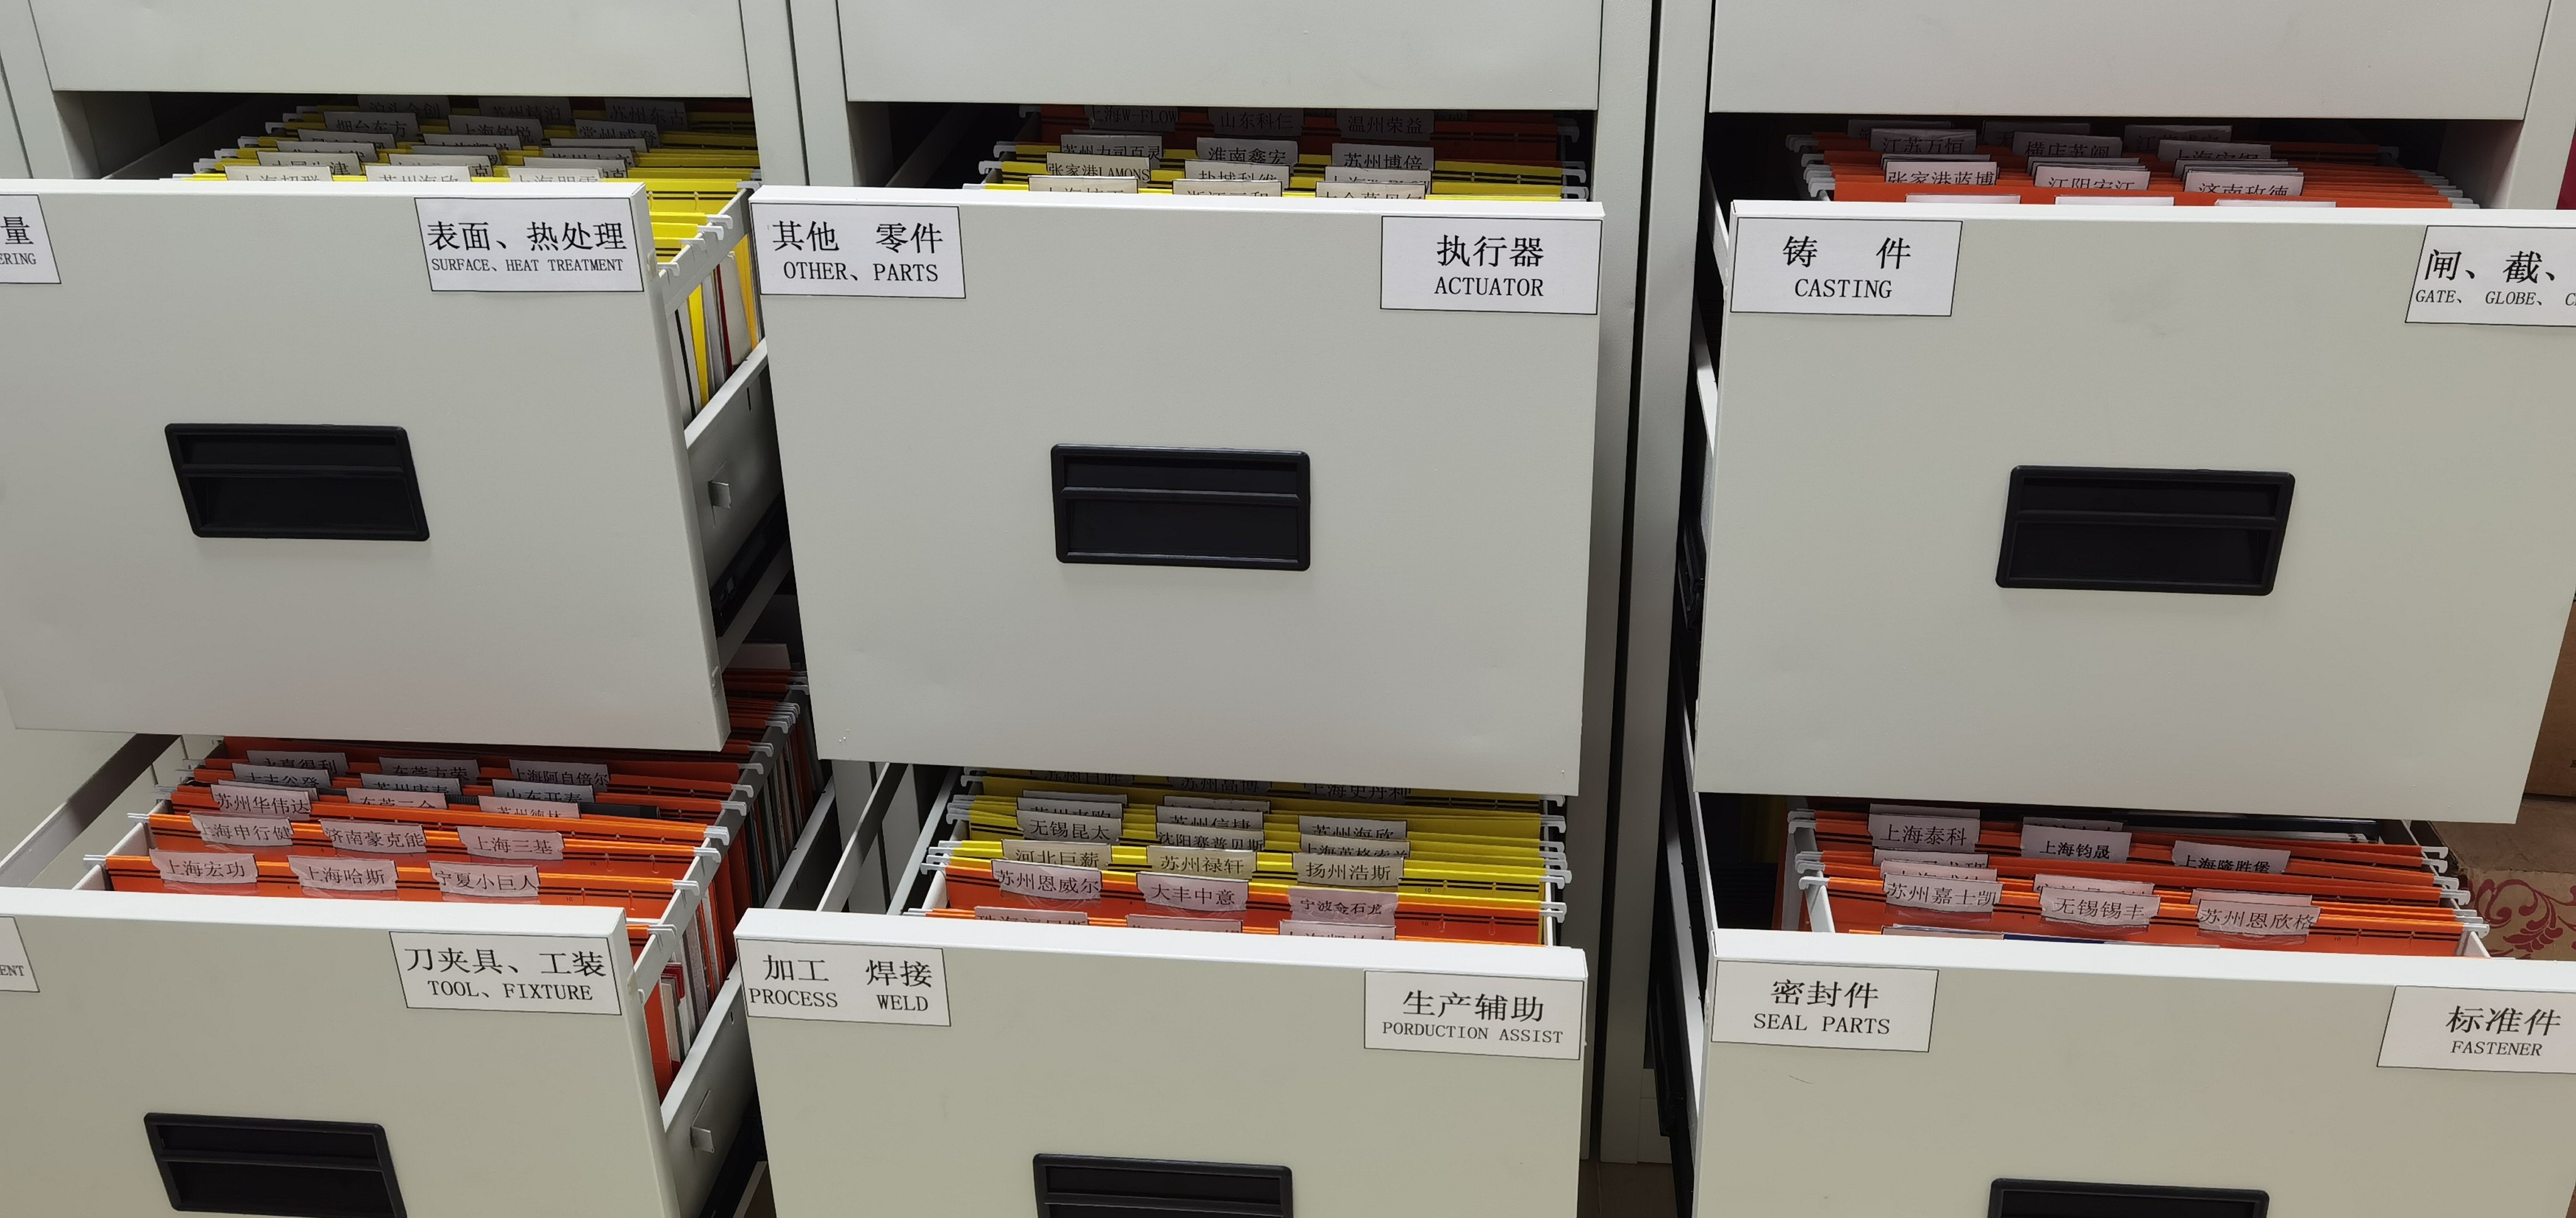 Suzhou 5A Valve   File cabinet